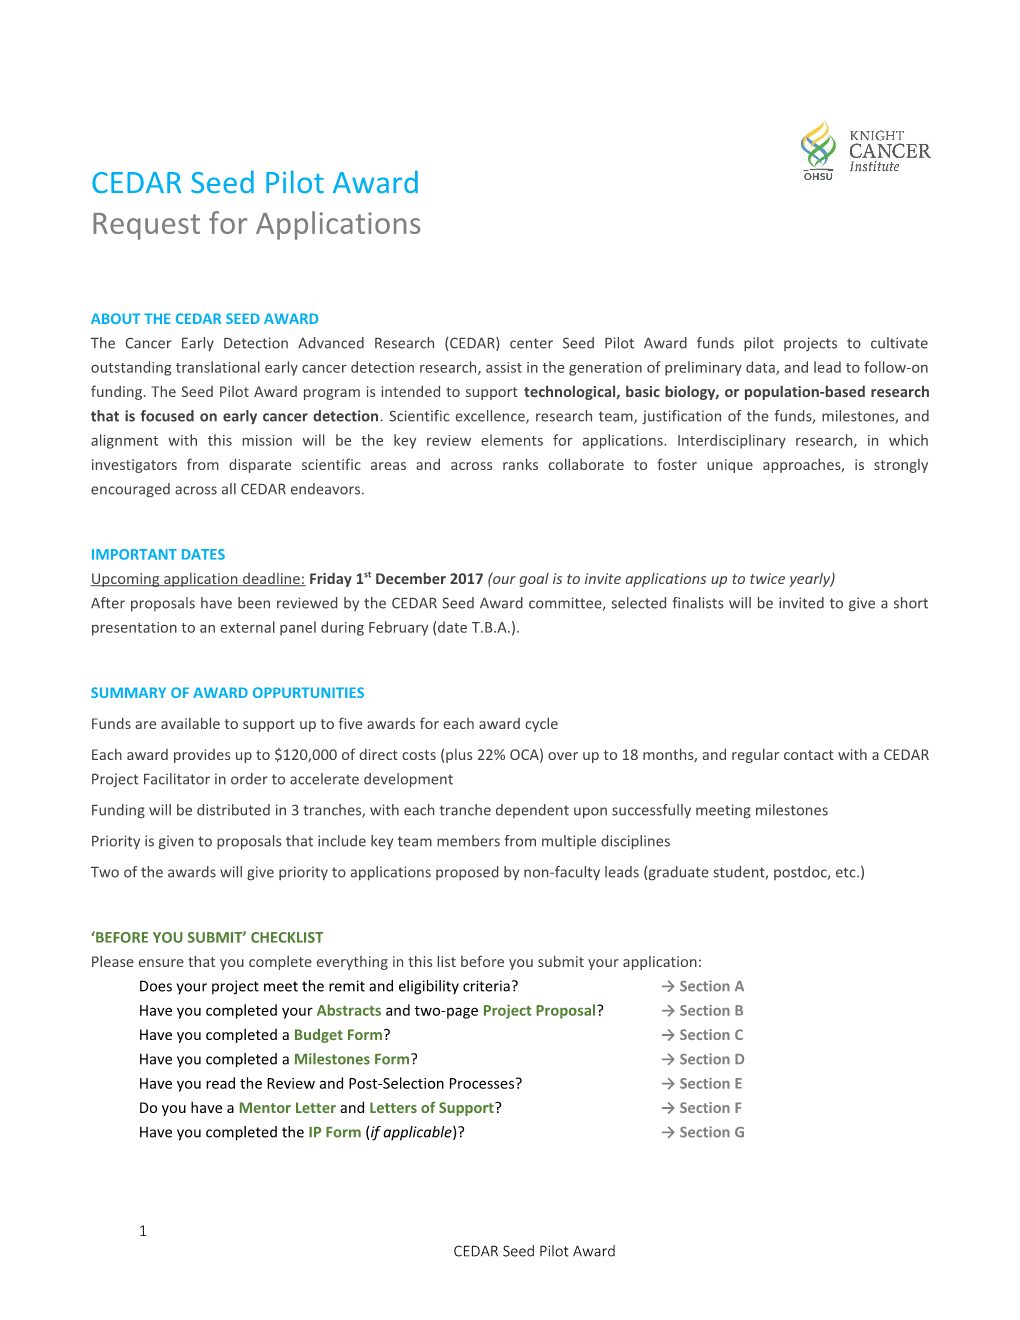 CEDAR Seed Pilotaward